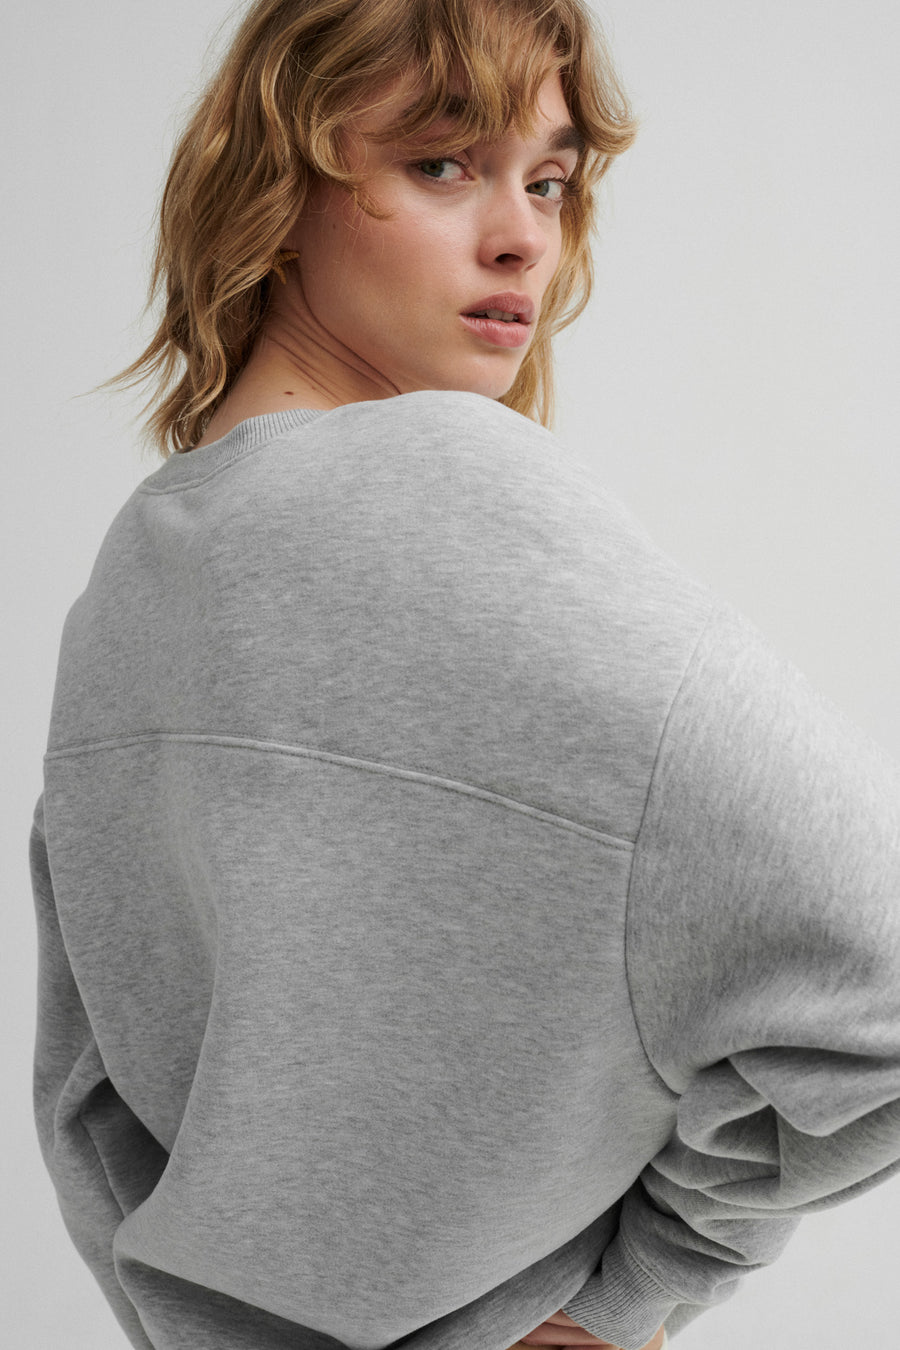 Sweatshirt in organic cotton / 17 / 19 / mist grey PRE-ORDER